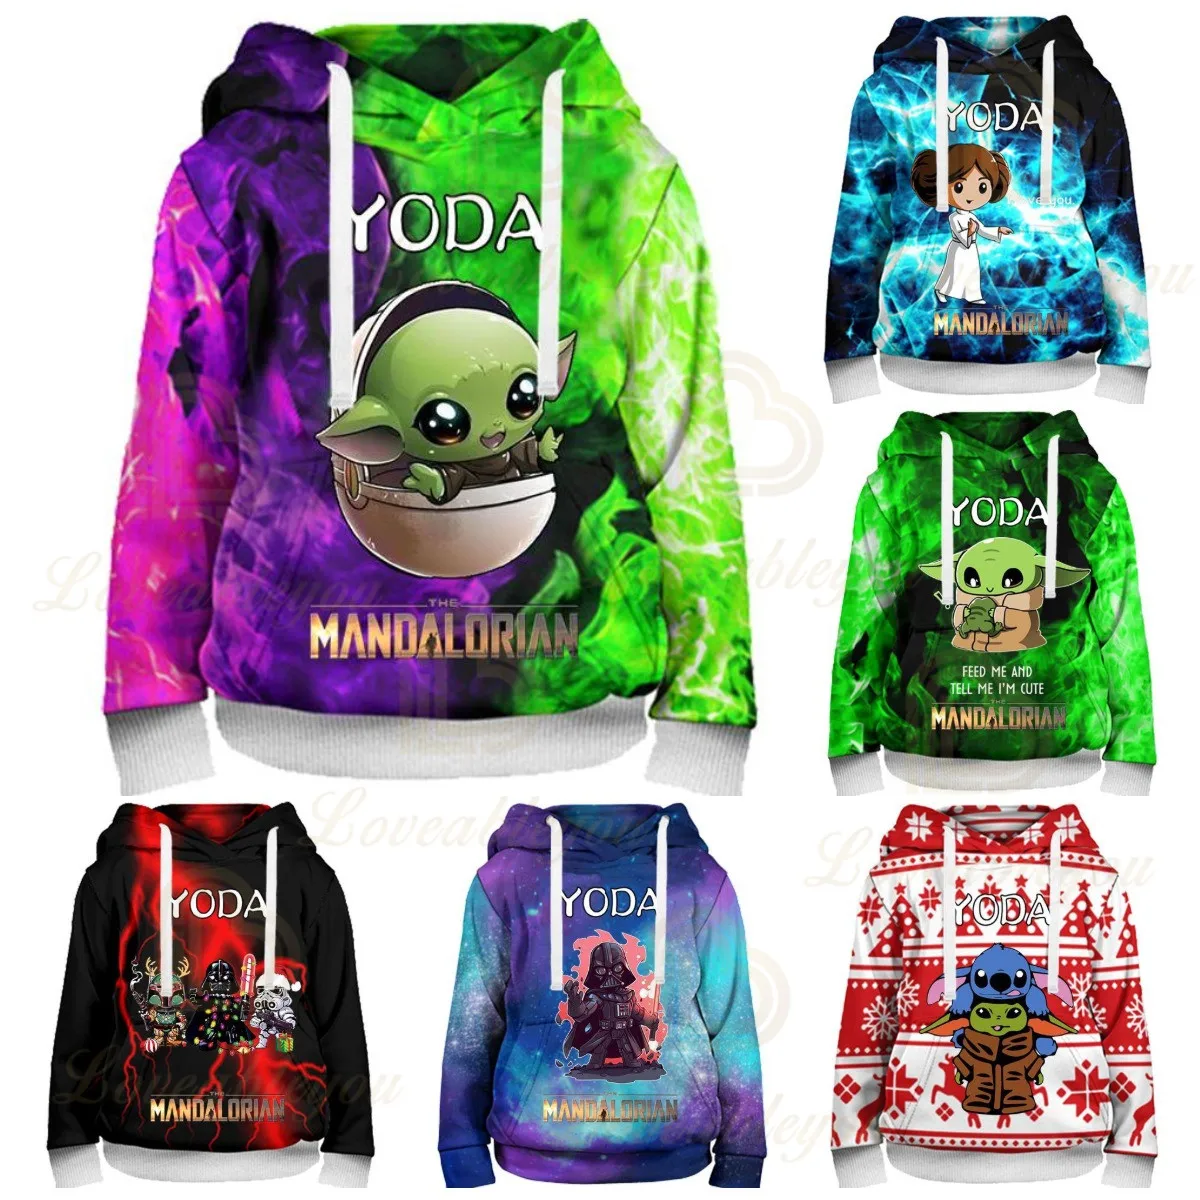 

Boys and Girls Cartoon Jacket Tops Teen Clothes Disney Baby Yoda Mandalorian 3 To 14 Years Kids Hoodies 3D Printed Sweatshirt